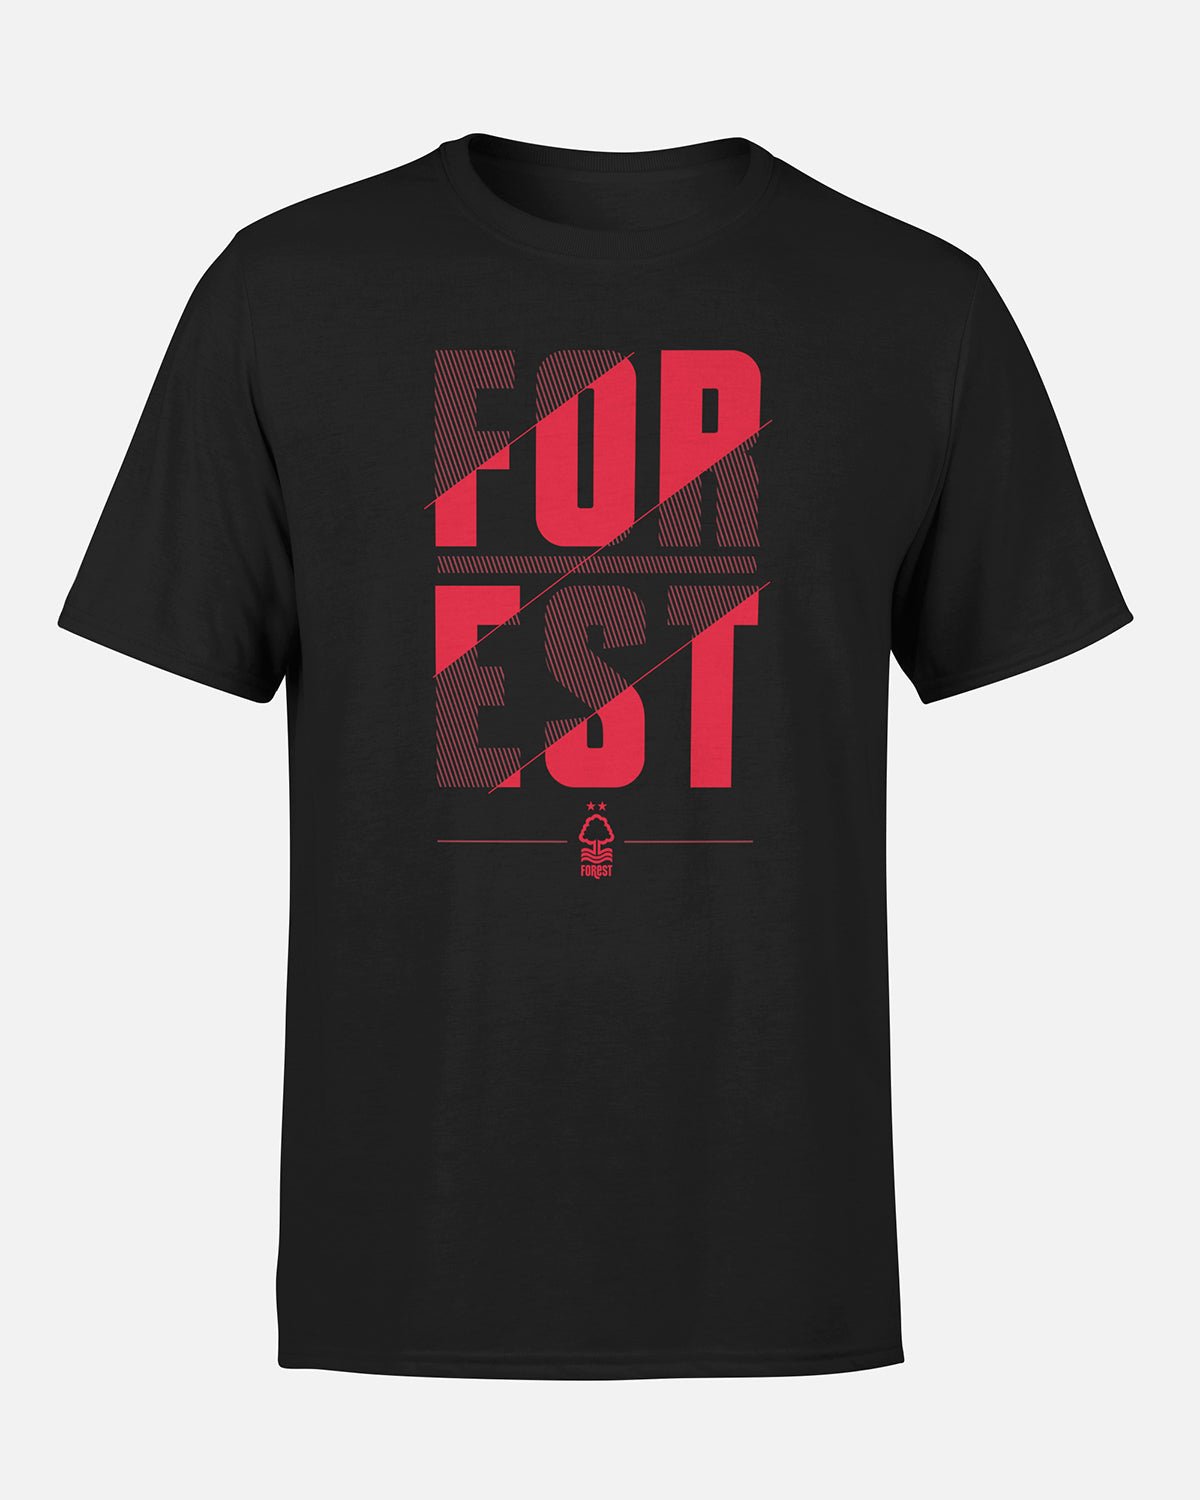 NFFC Junior Black Stacked Forest T-Shirt - Nottingham Forest FC